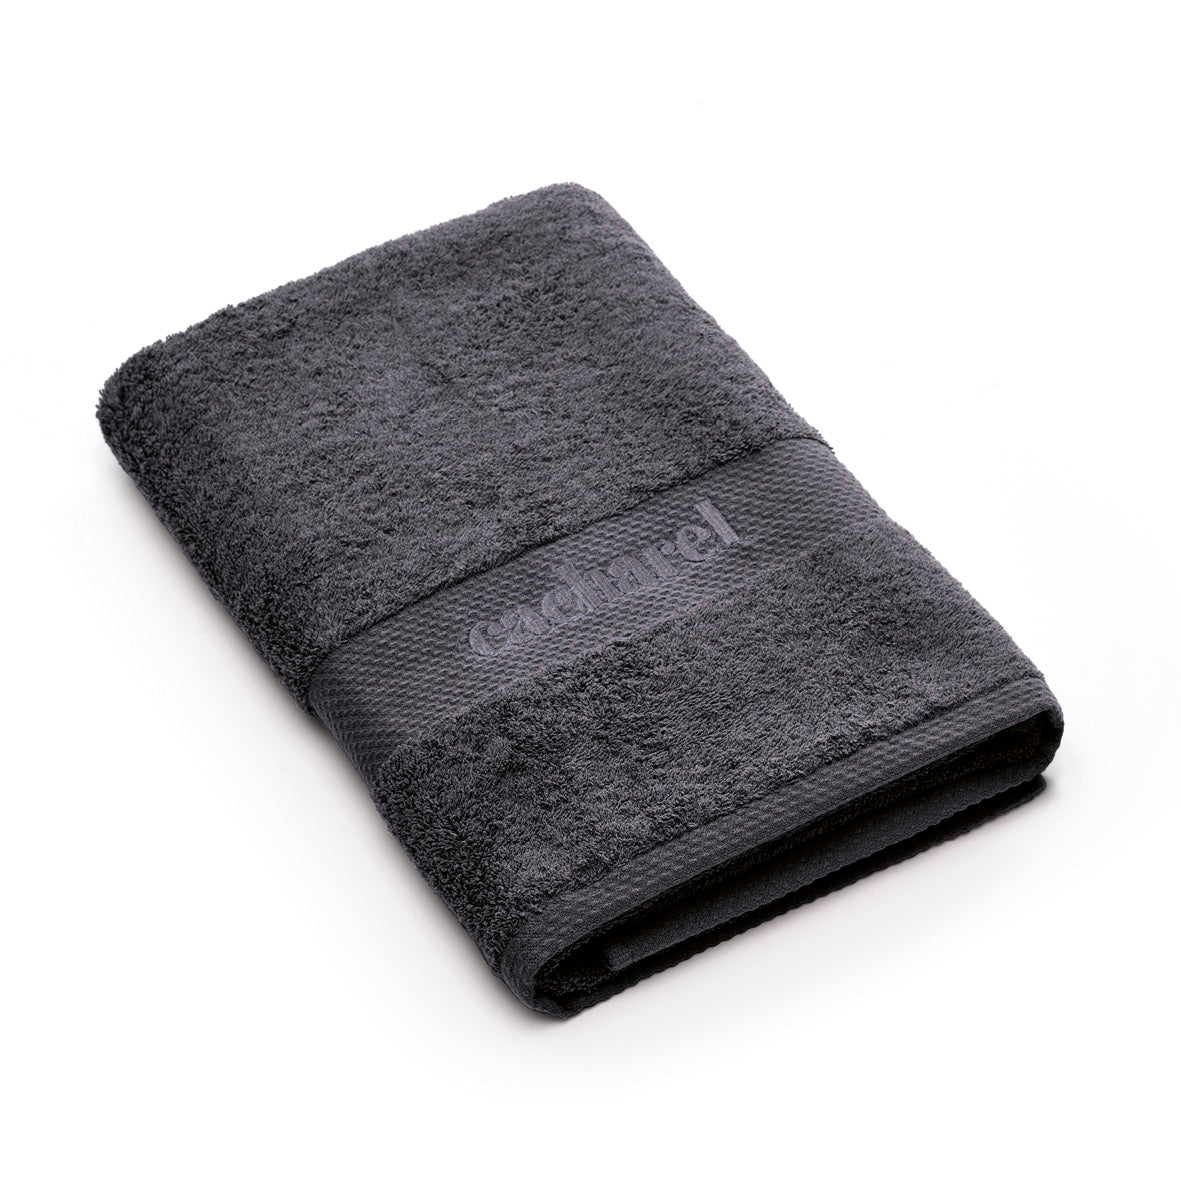 Maxi bath towel - 100 x 150 cm Dark grey